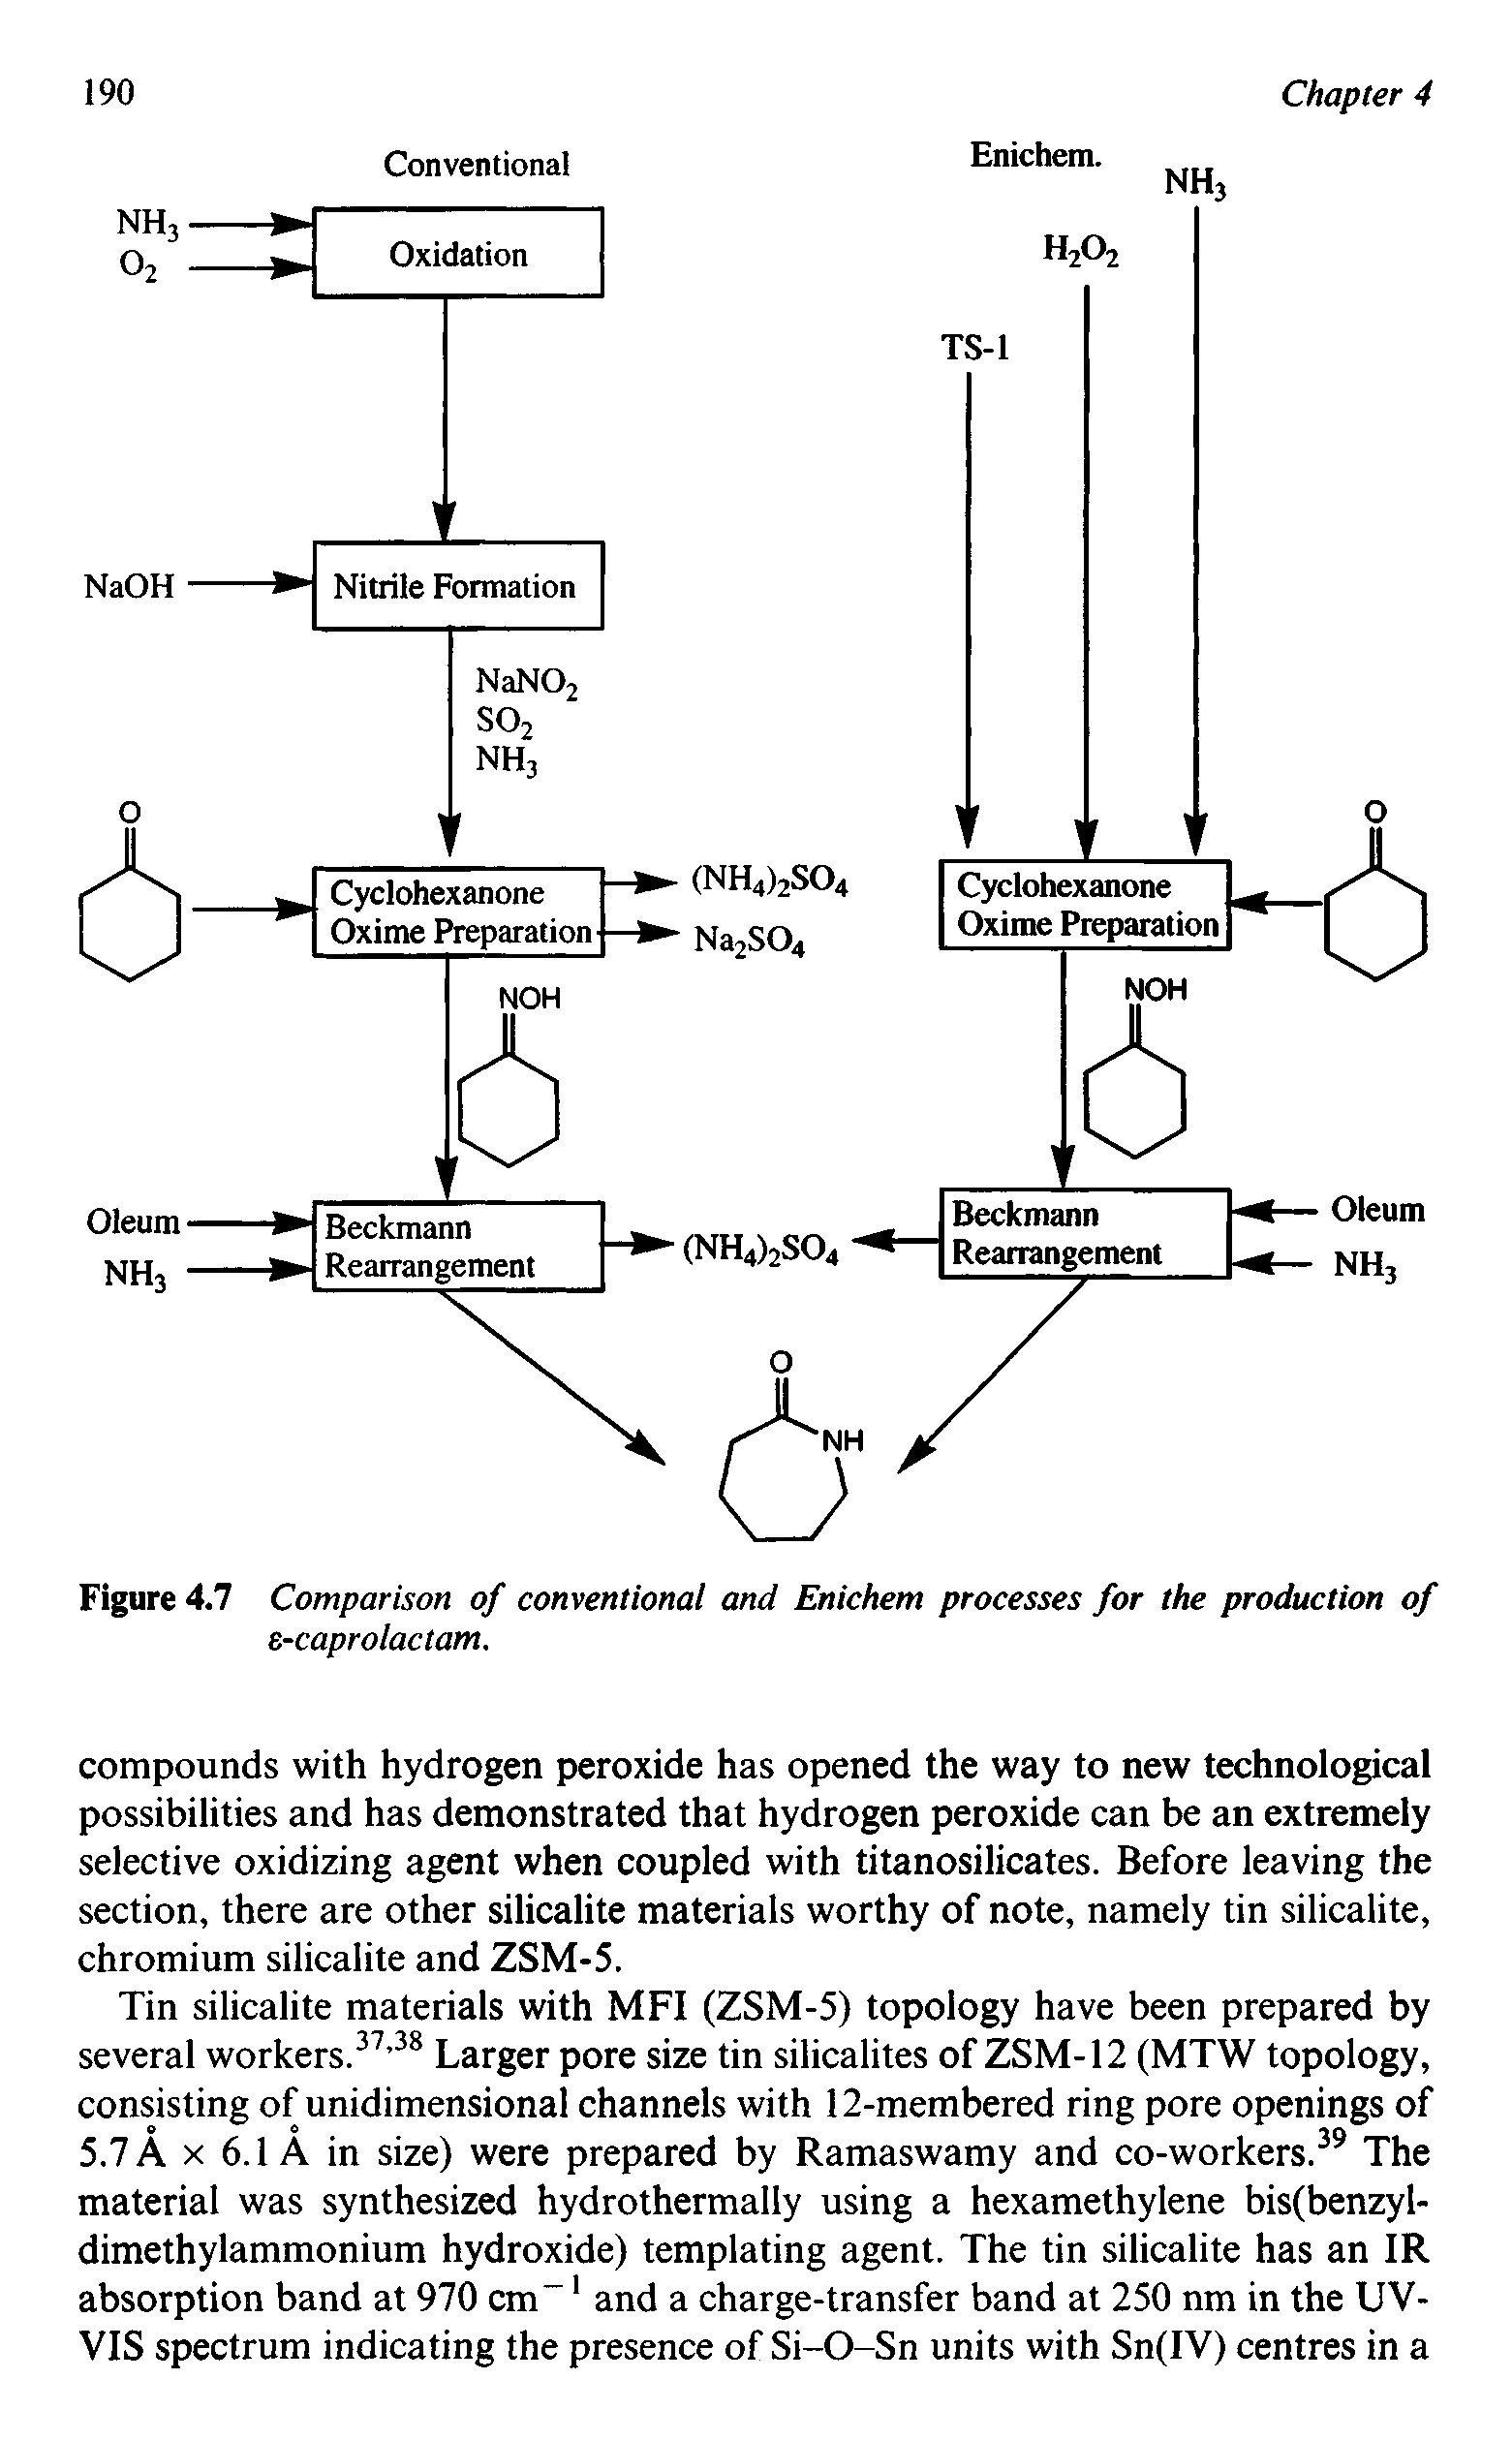 Figure 4.7 Comparison of conventional and Enichem processes for the production of e-caprolactam.